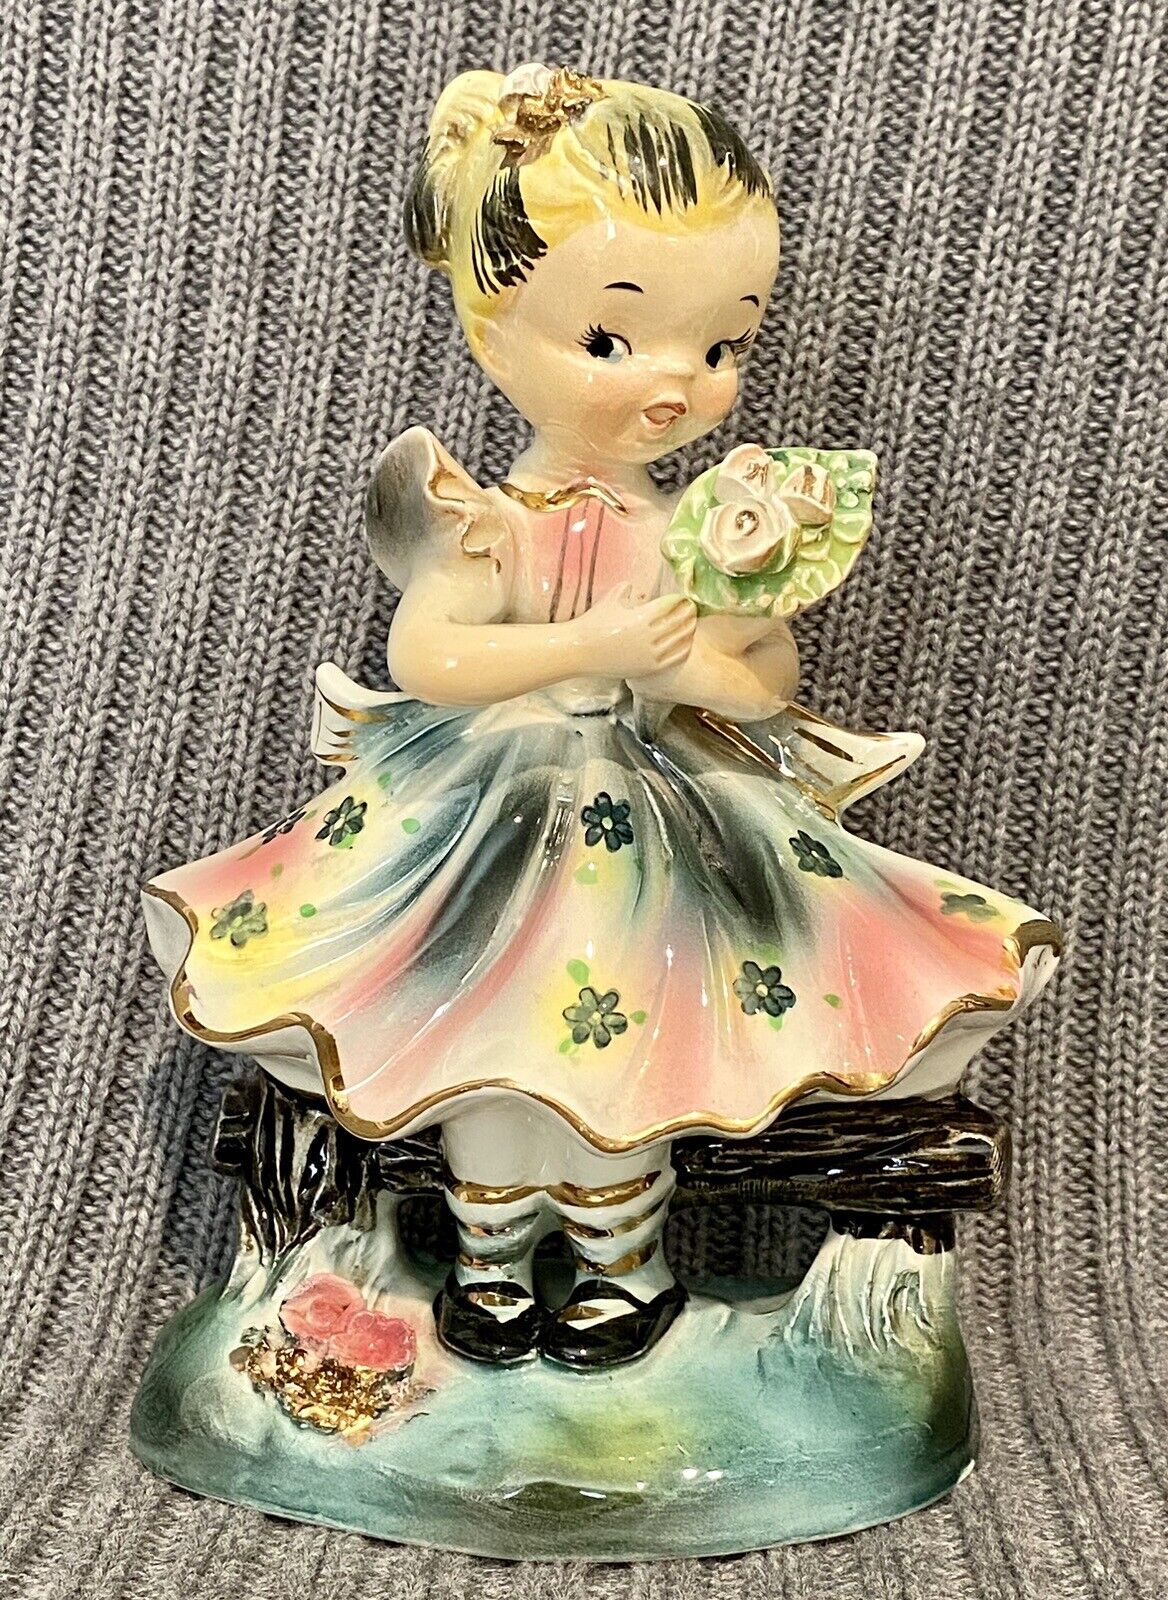 1950s HB Japan Little Girl Figurine Holding Flowers Blond Ponytail 💗 6”